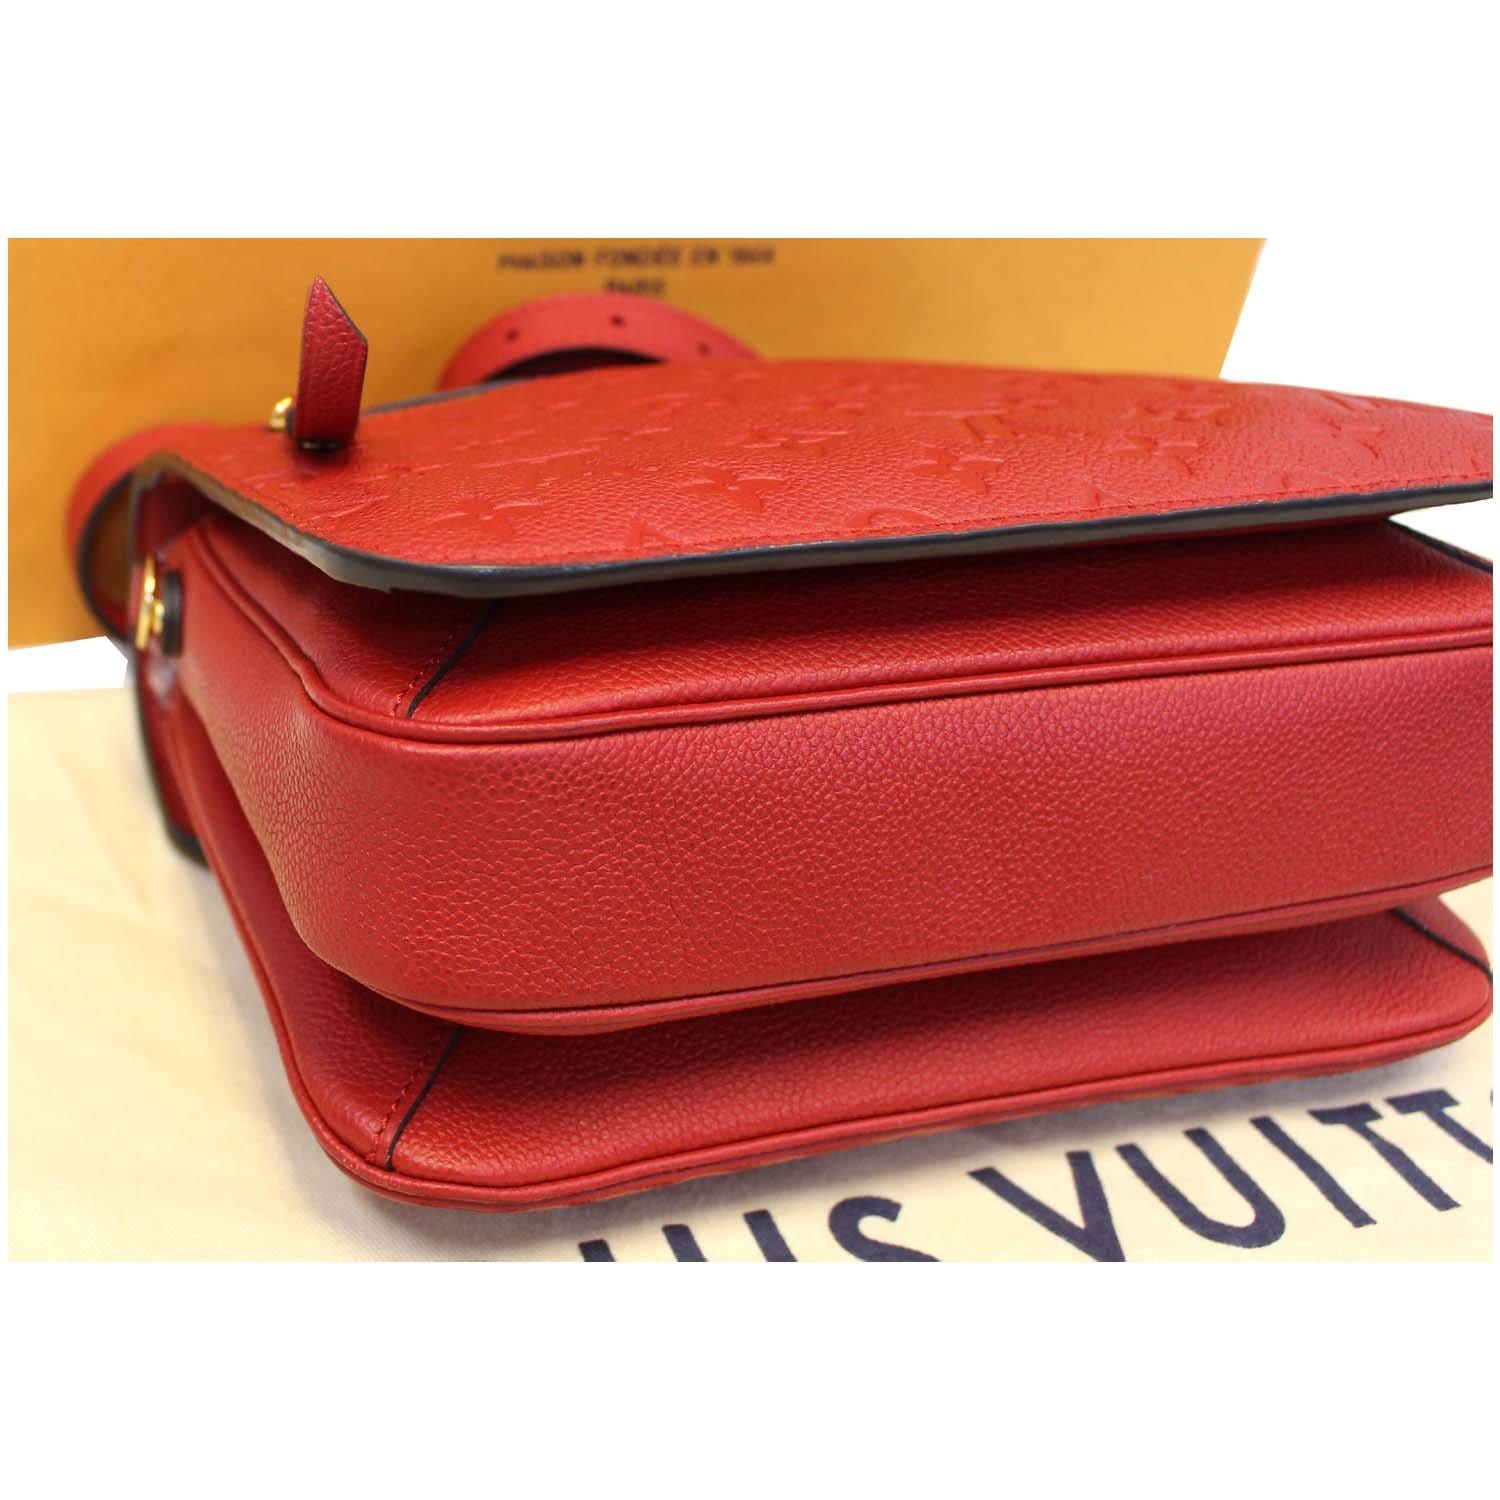 Louis Vuitton Red Monogram Leather Empreinte Pochette Metis